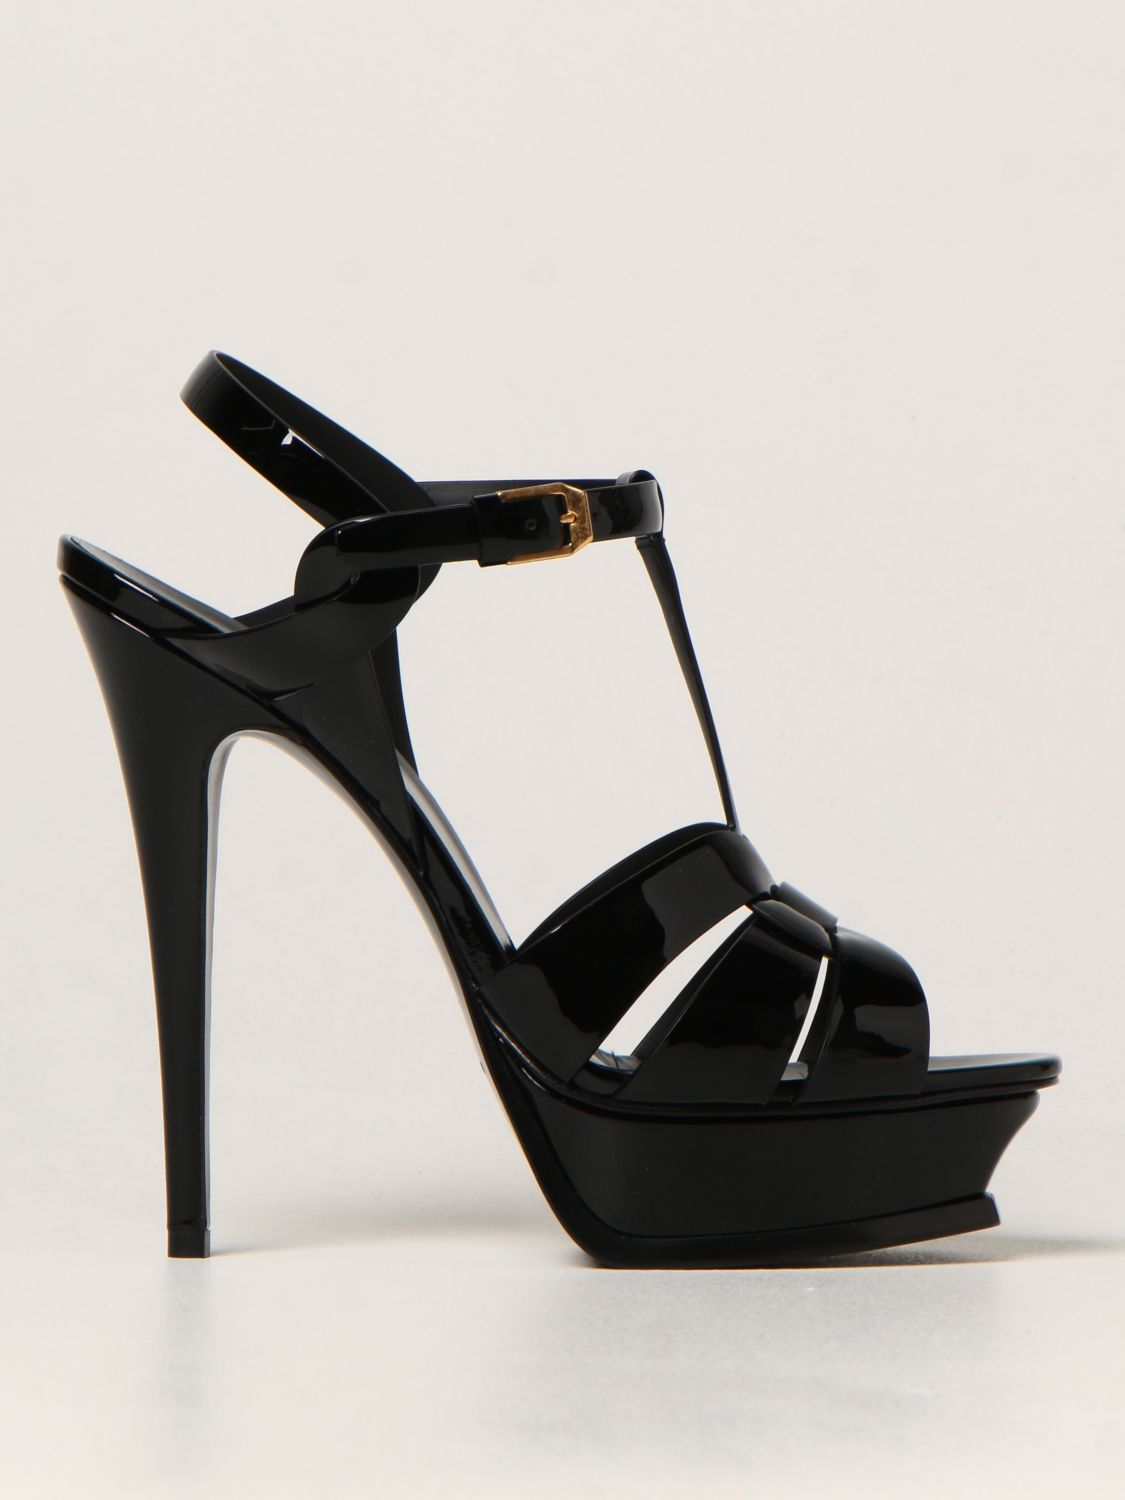 Saint Laurent Tribute Patent Leather Sandals In Black | ModeSens